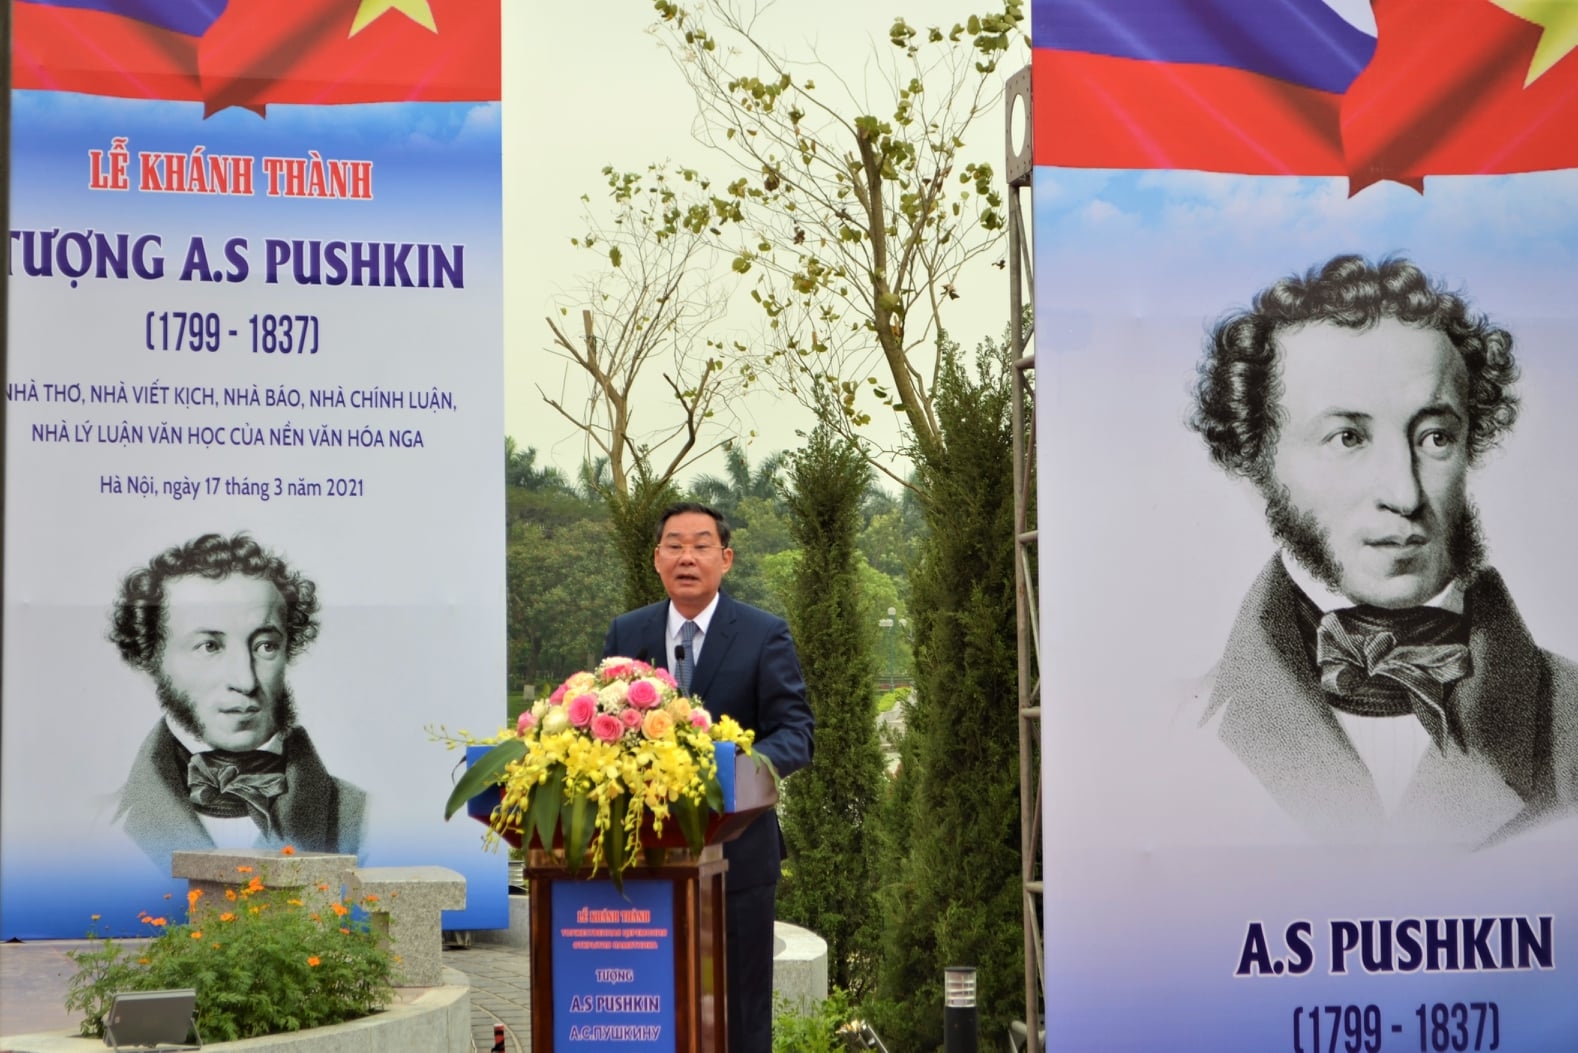 Famous Russian poet Pushkin unveiled in Hanoi's park